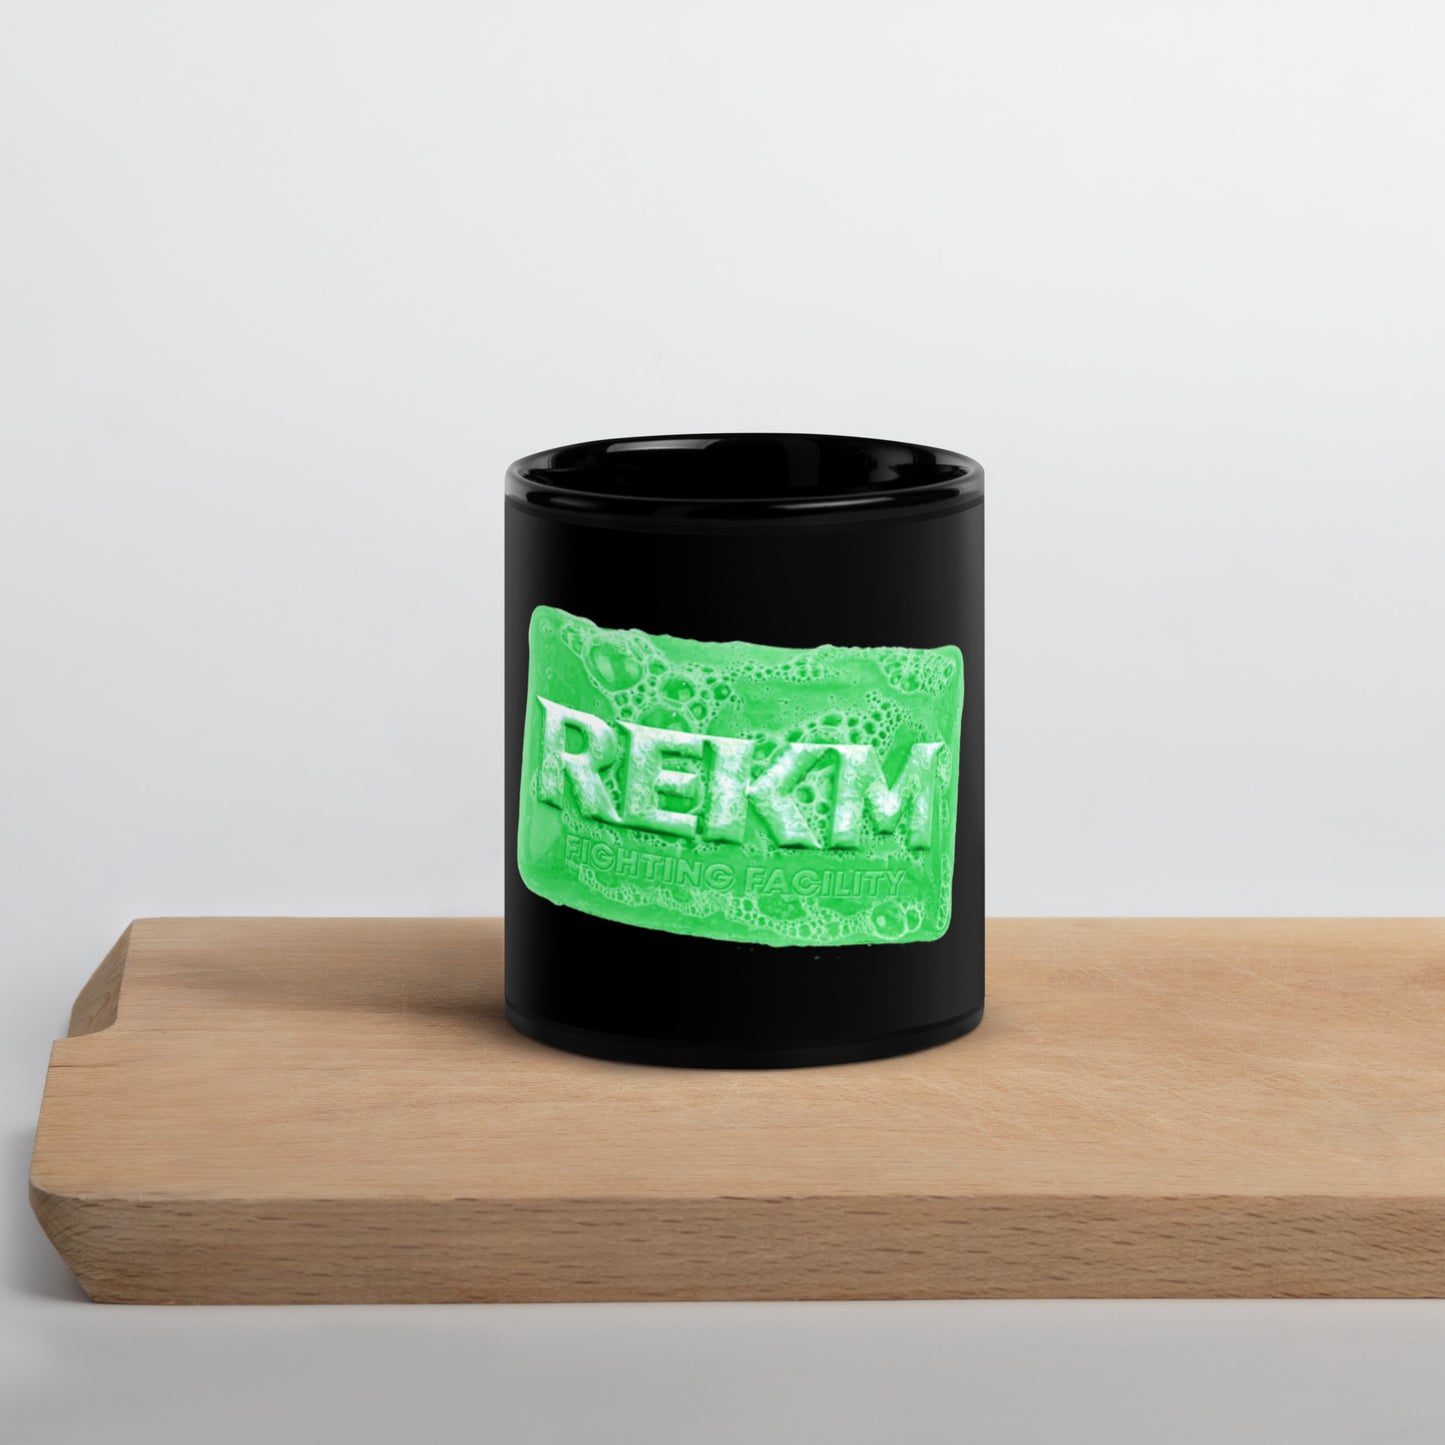 'Green REKM Fighting Facility Edition' Black Glossy Mug